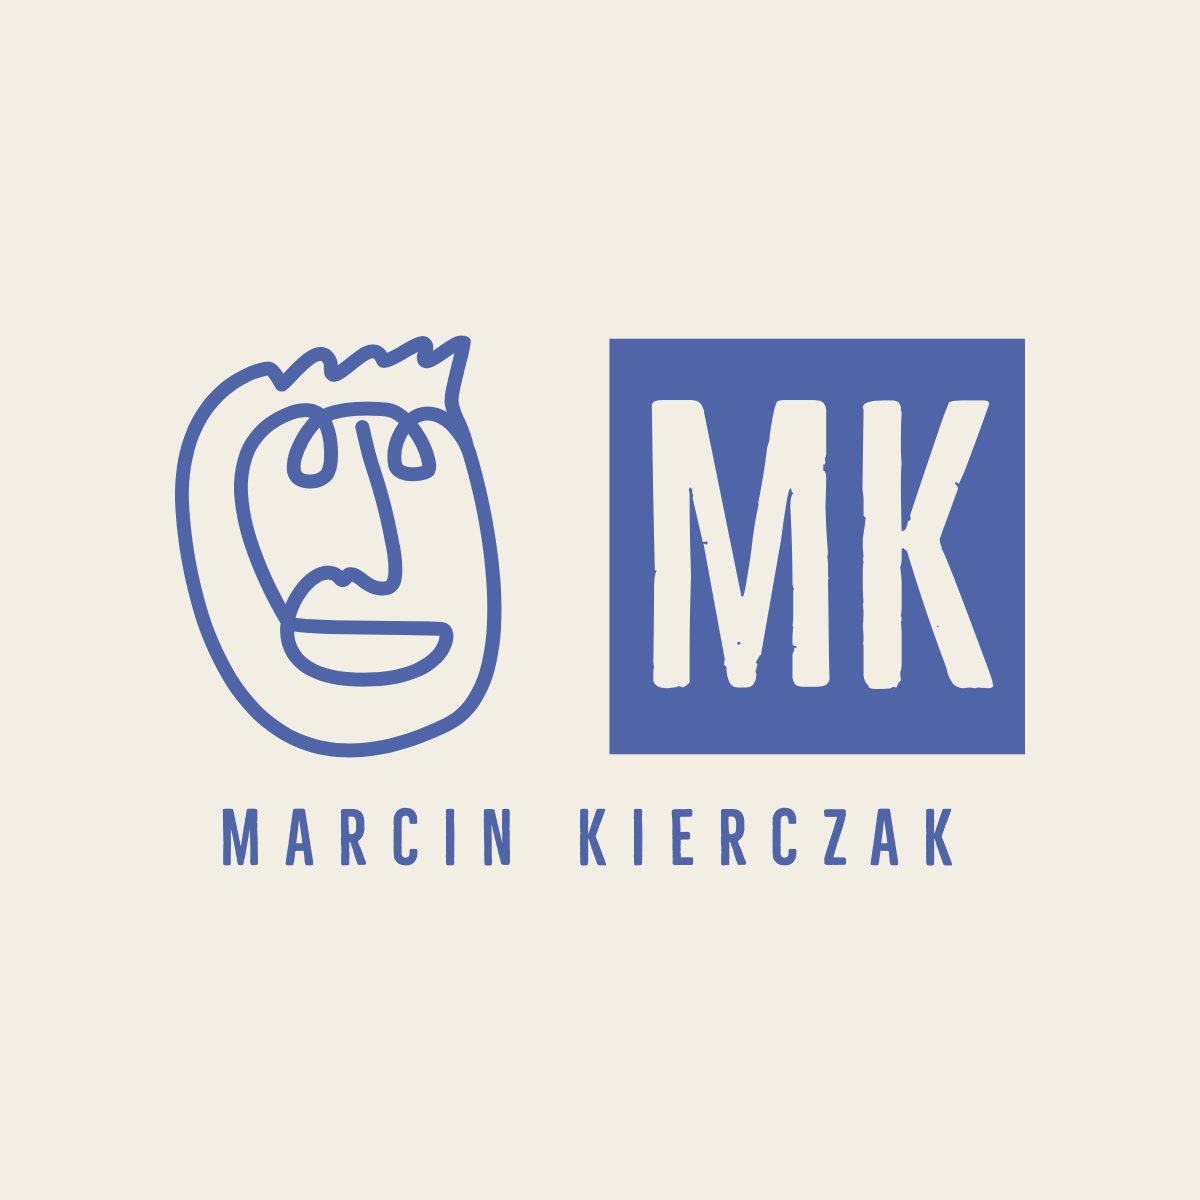 Marcin Kierczak personal logo